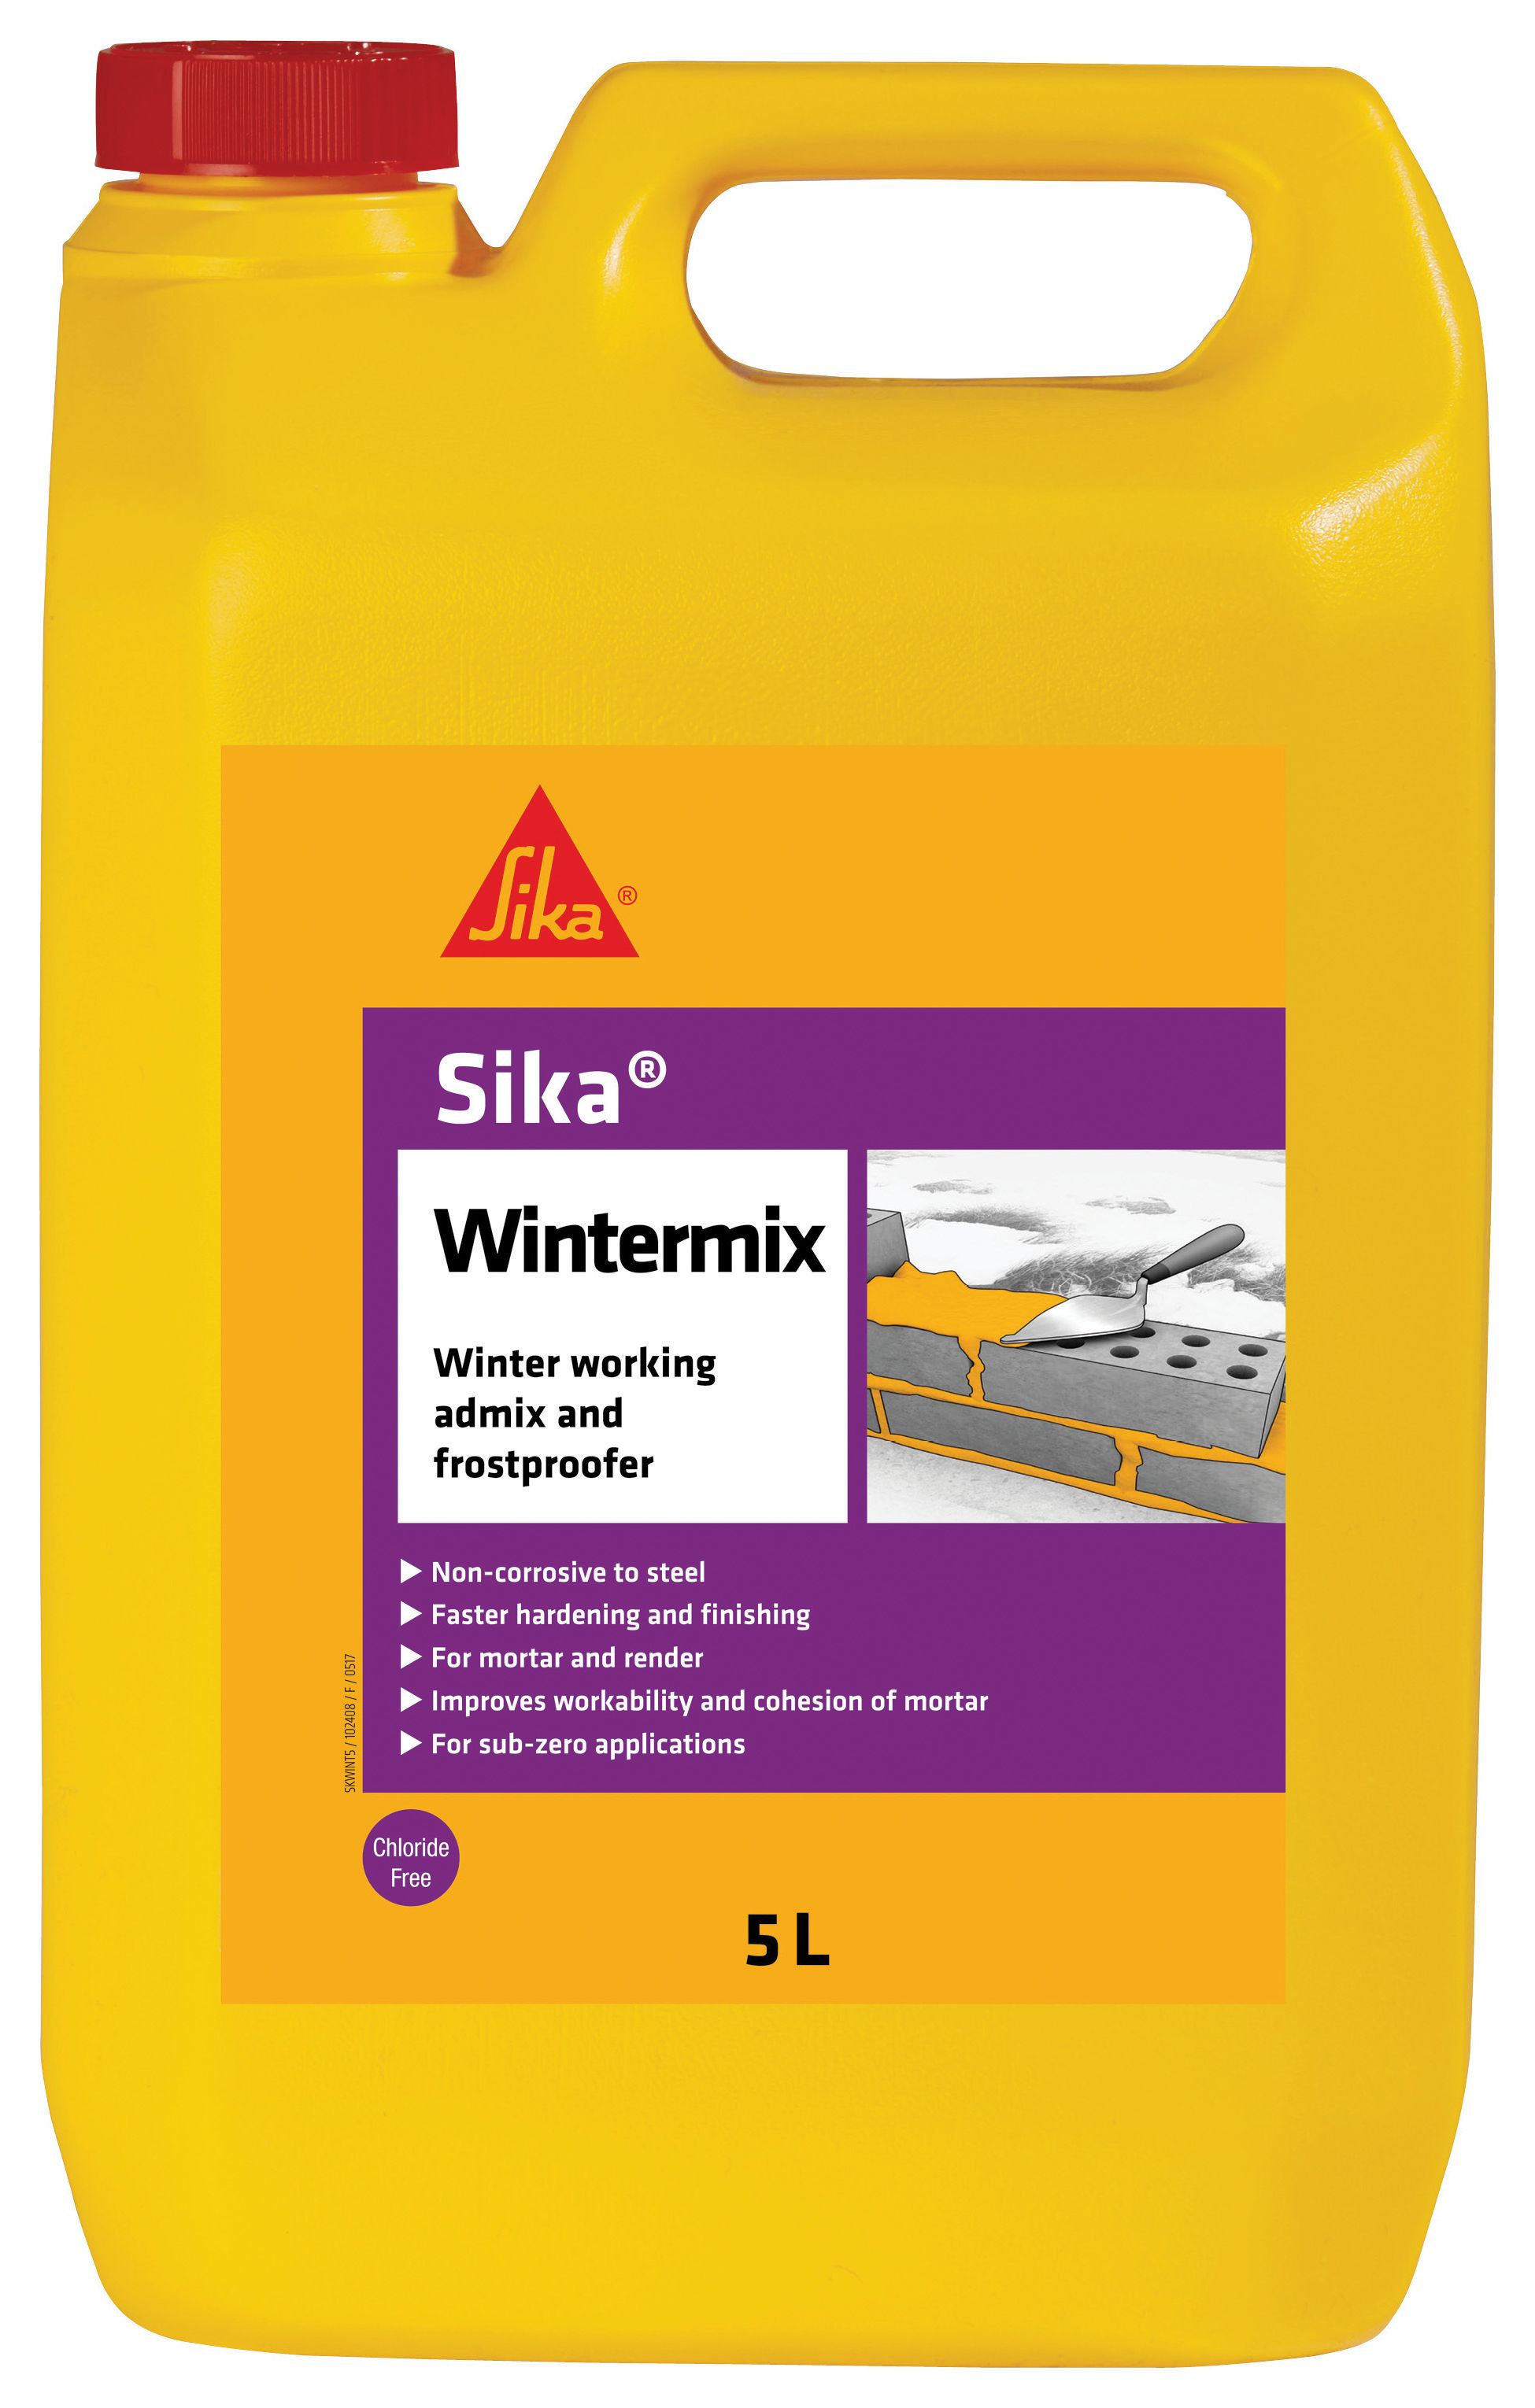 Sika Wintermix Chloride Free Admix & Frostproofer - 5L